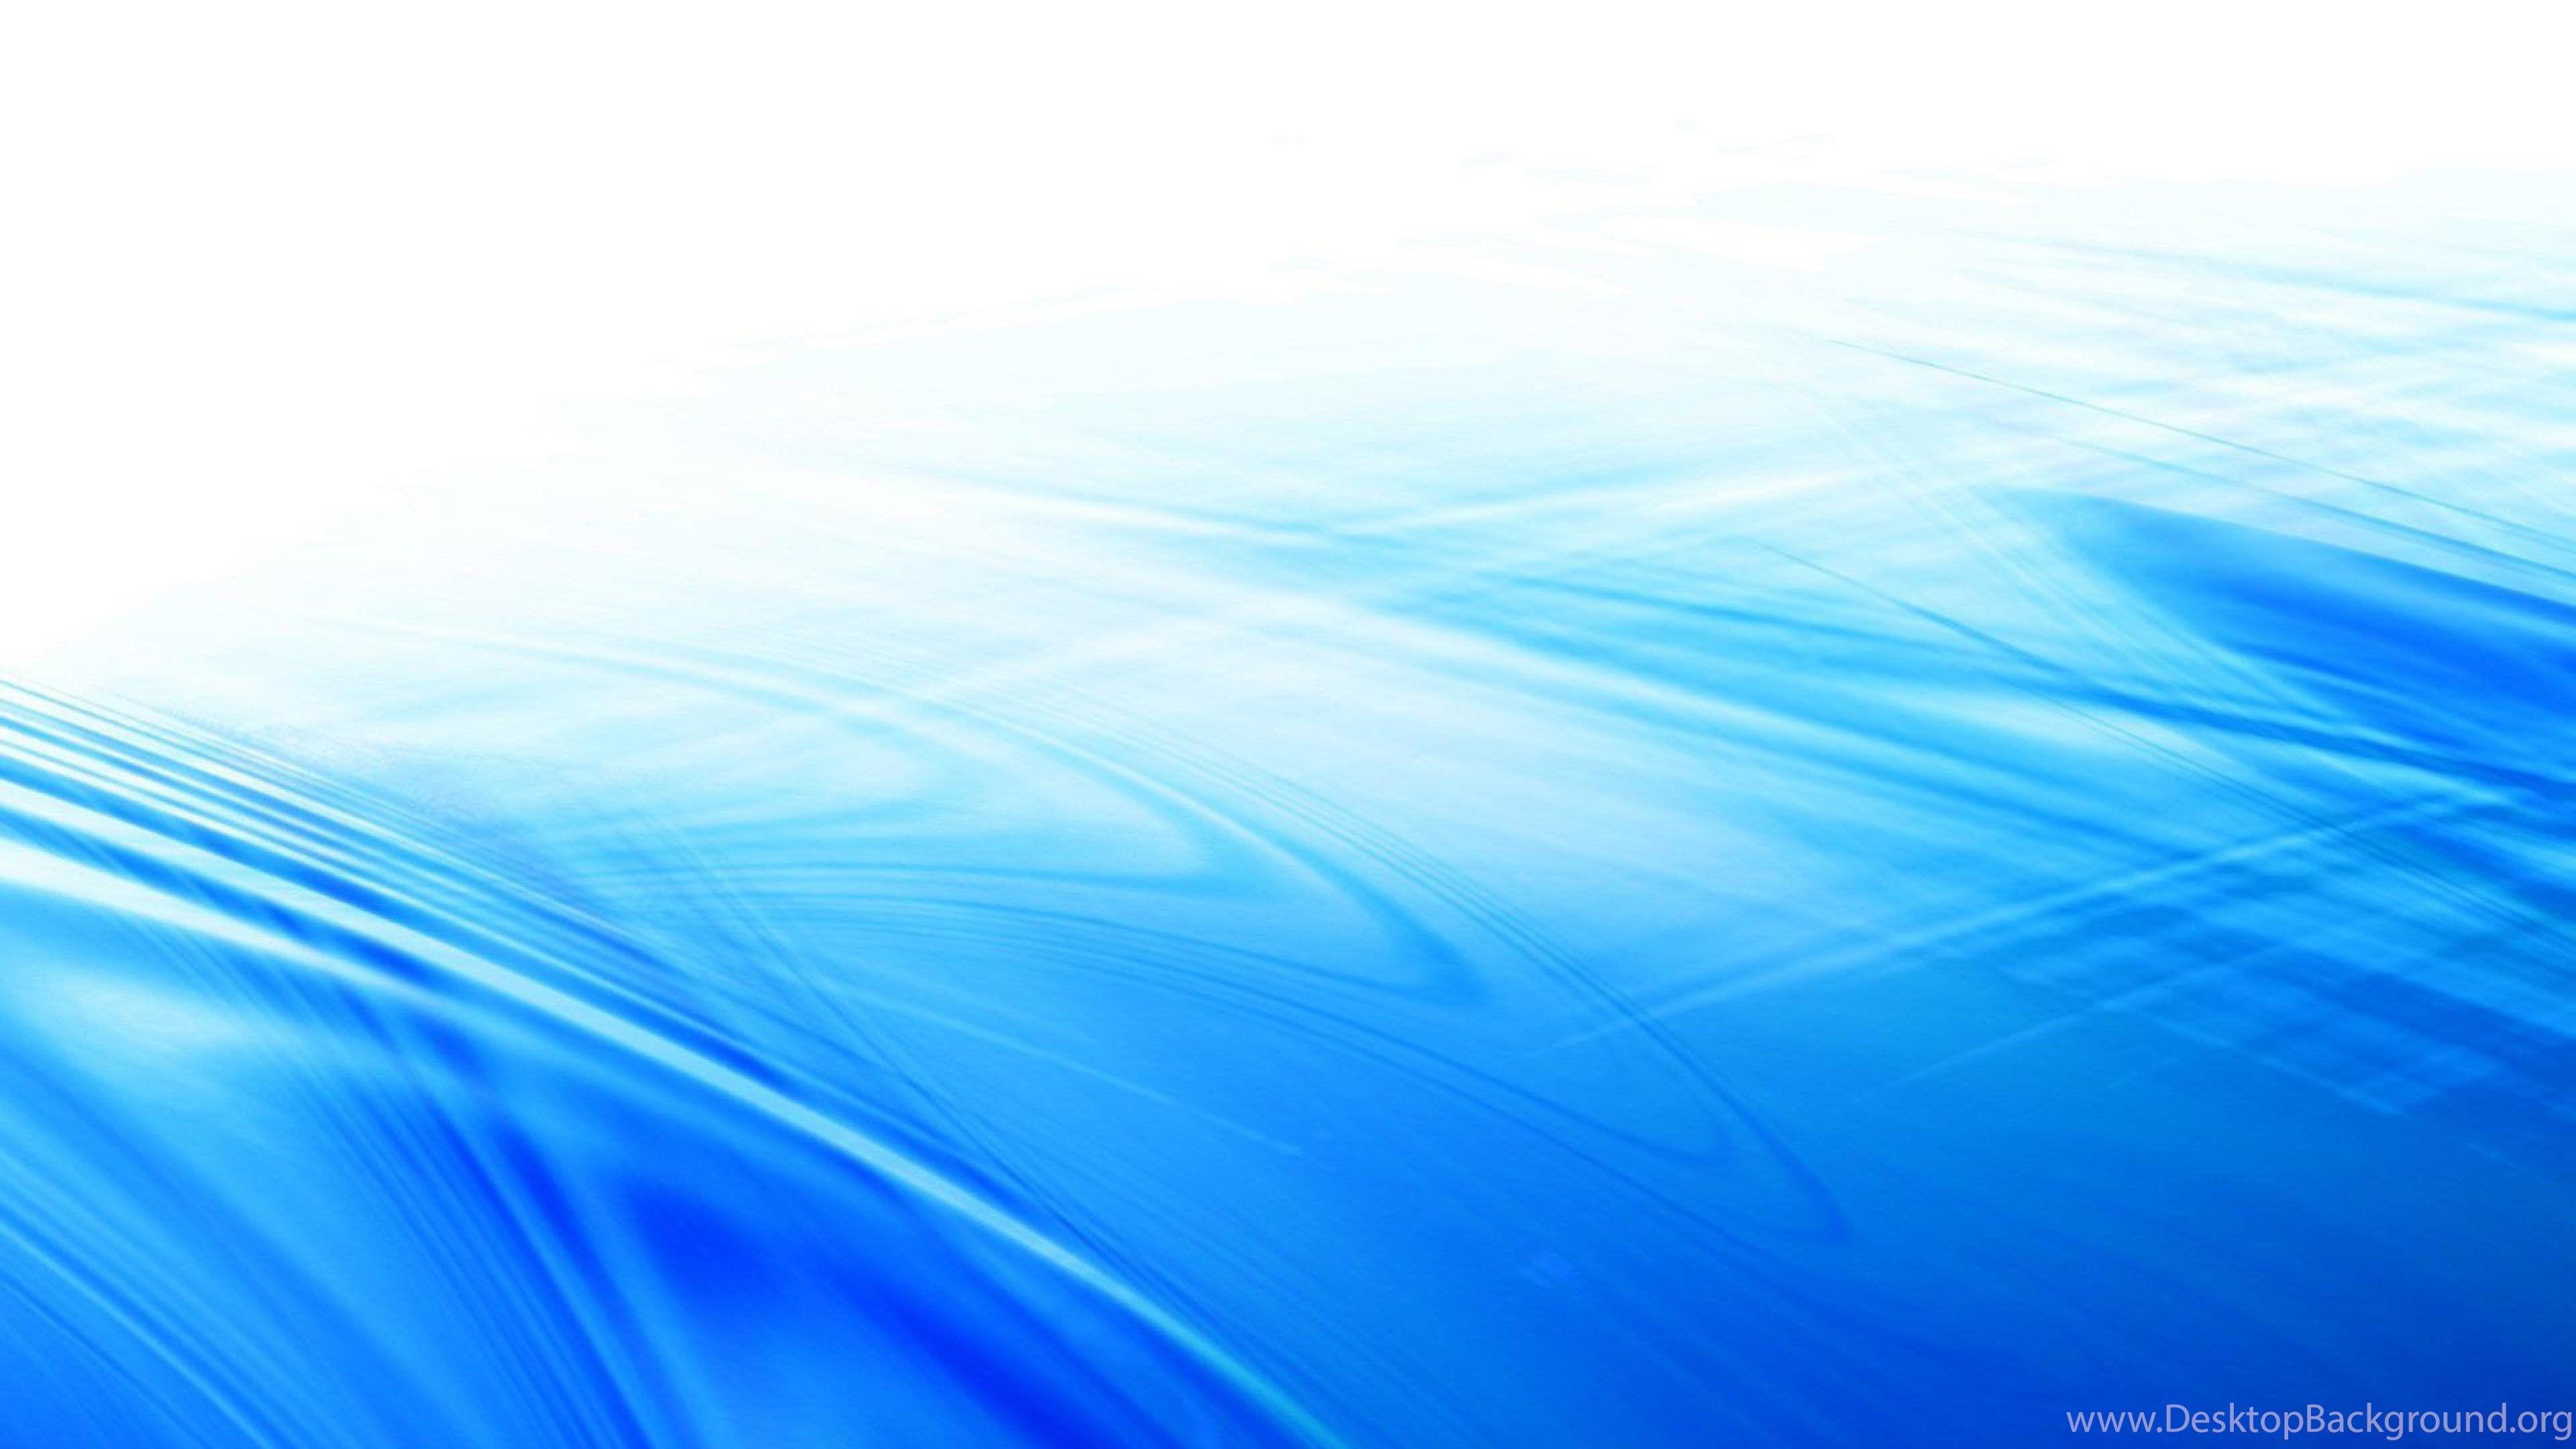 HD wallpaper Windows Vista Aero 14 HD Wallpaper blue wave wallpaper copy  space  Wallpaper Flare